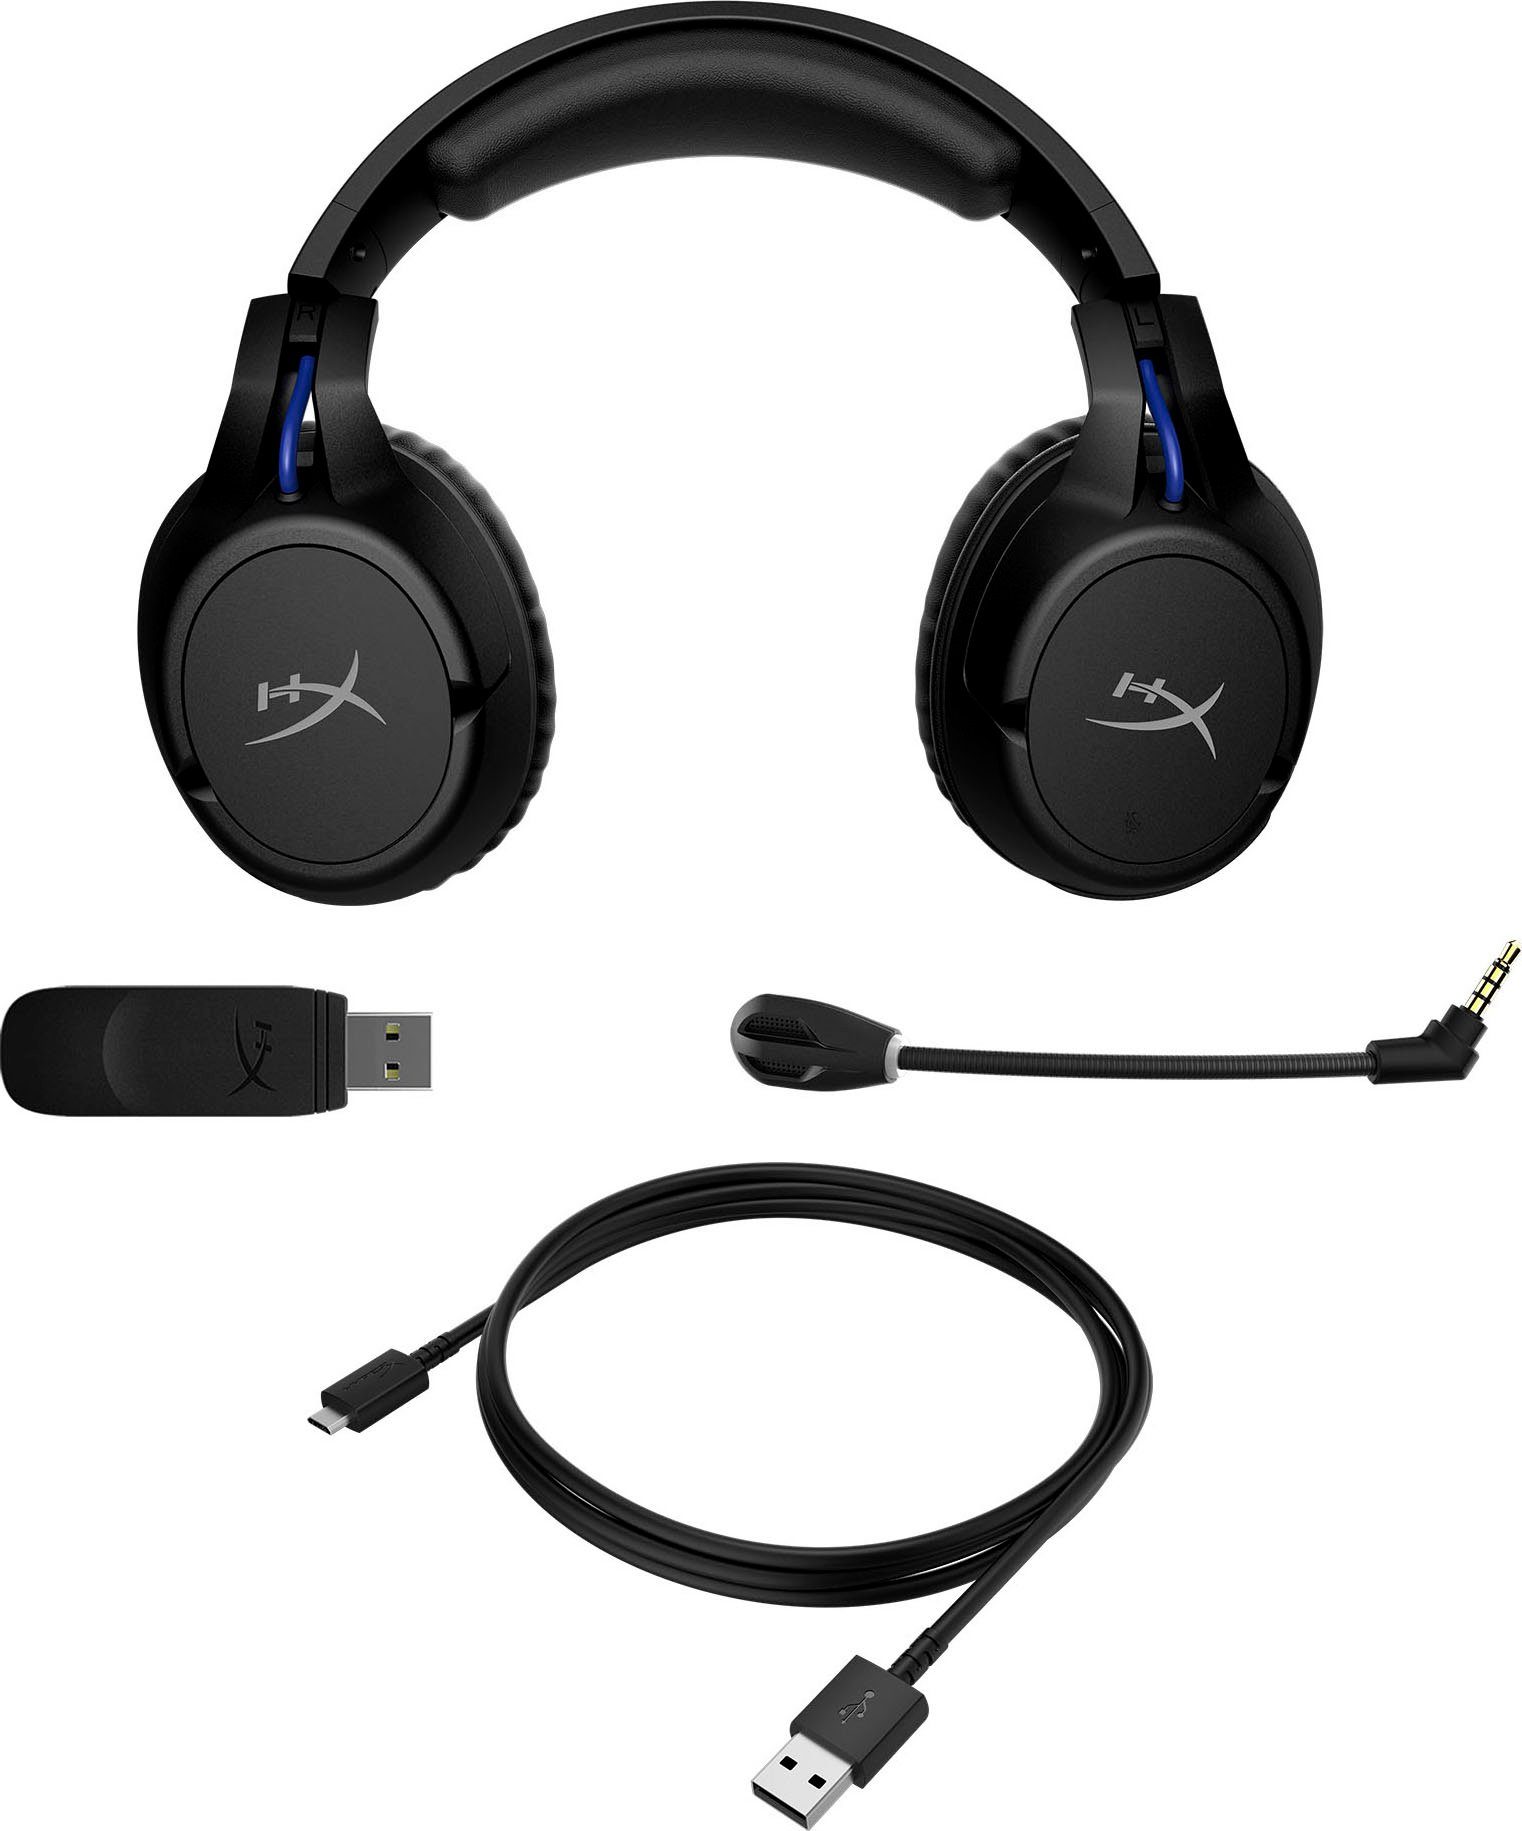 HyperX Cloud Flight (Mikrofon Wireless Black/Blue Gaming-Headset Wireless) abnehmbar, Rauschunterdrückung, PlayStation für